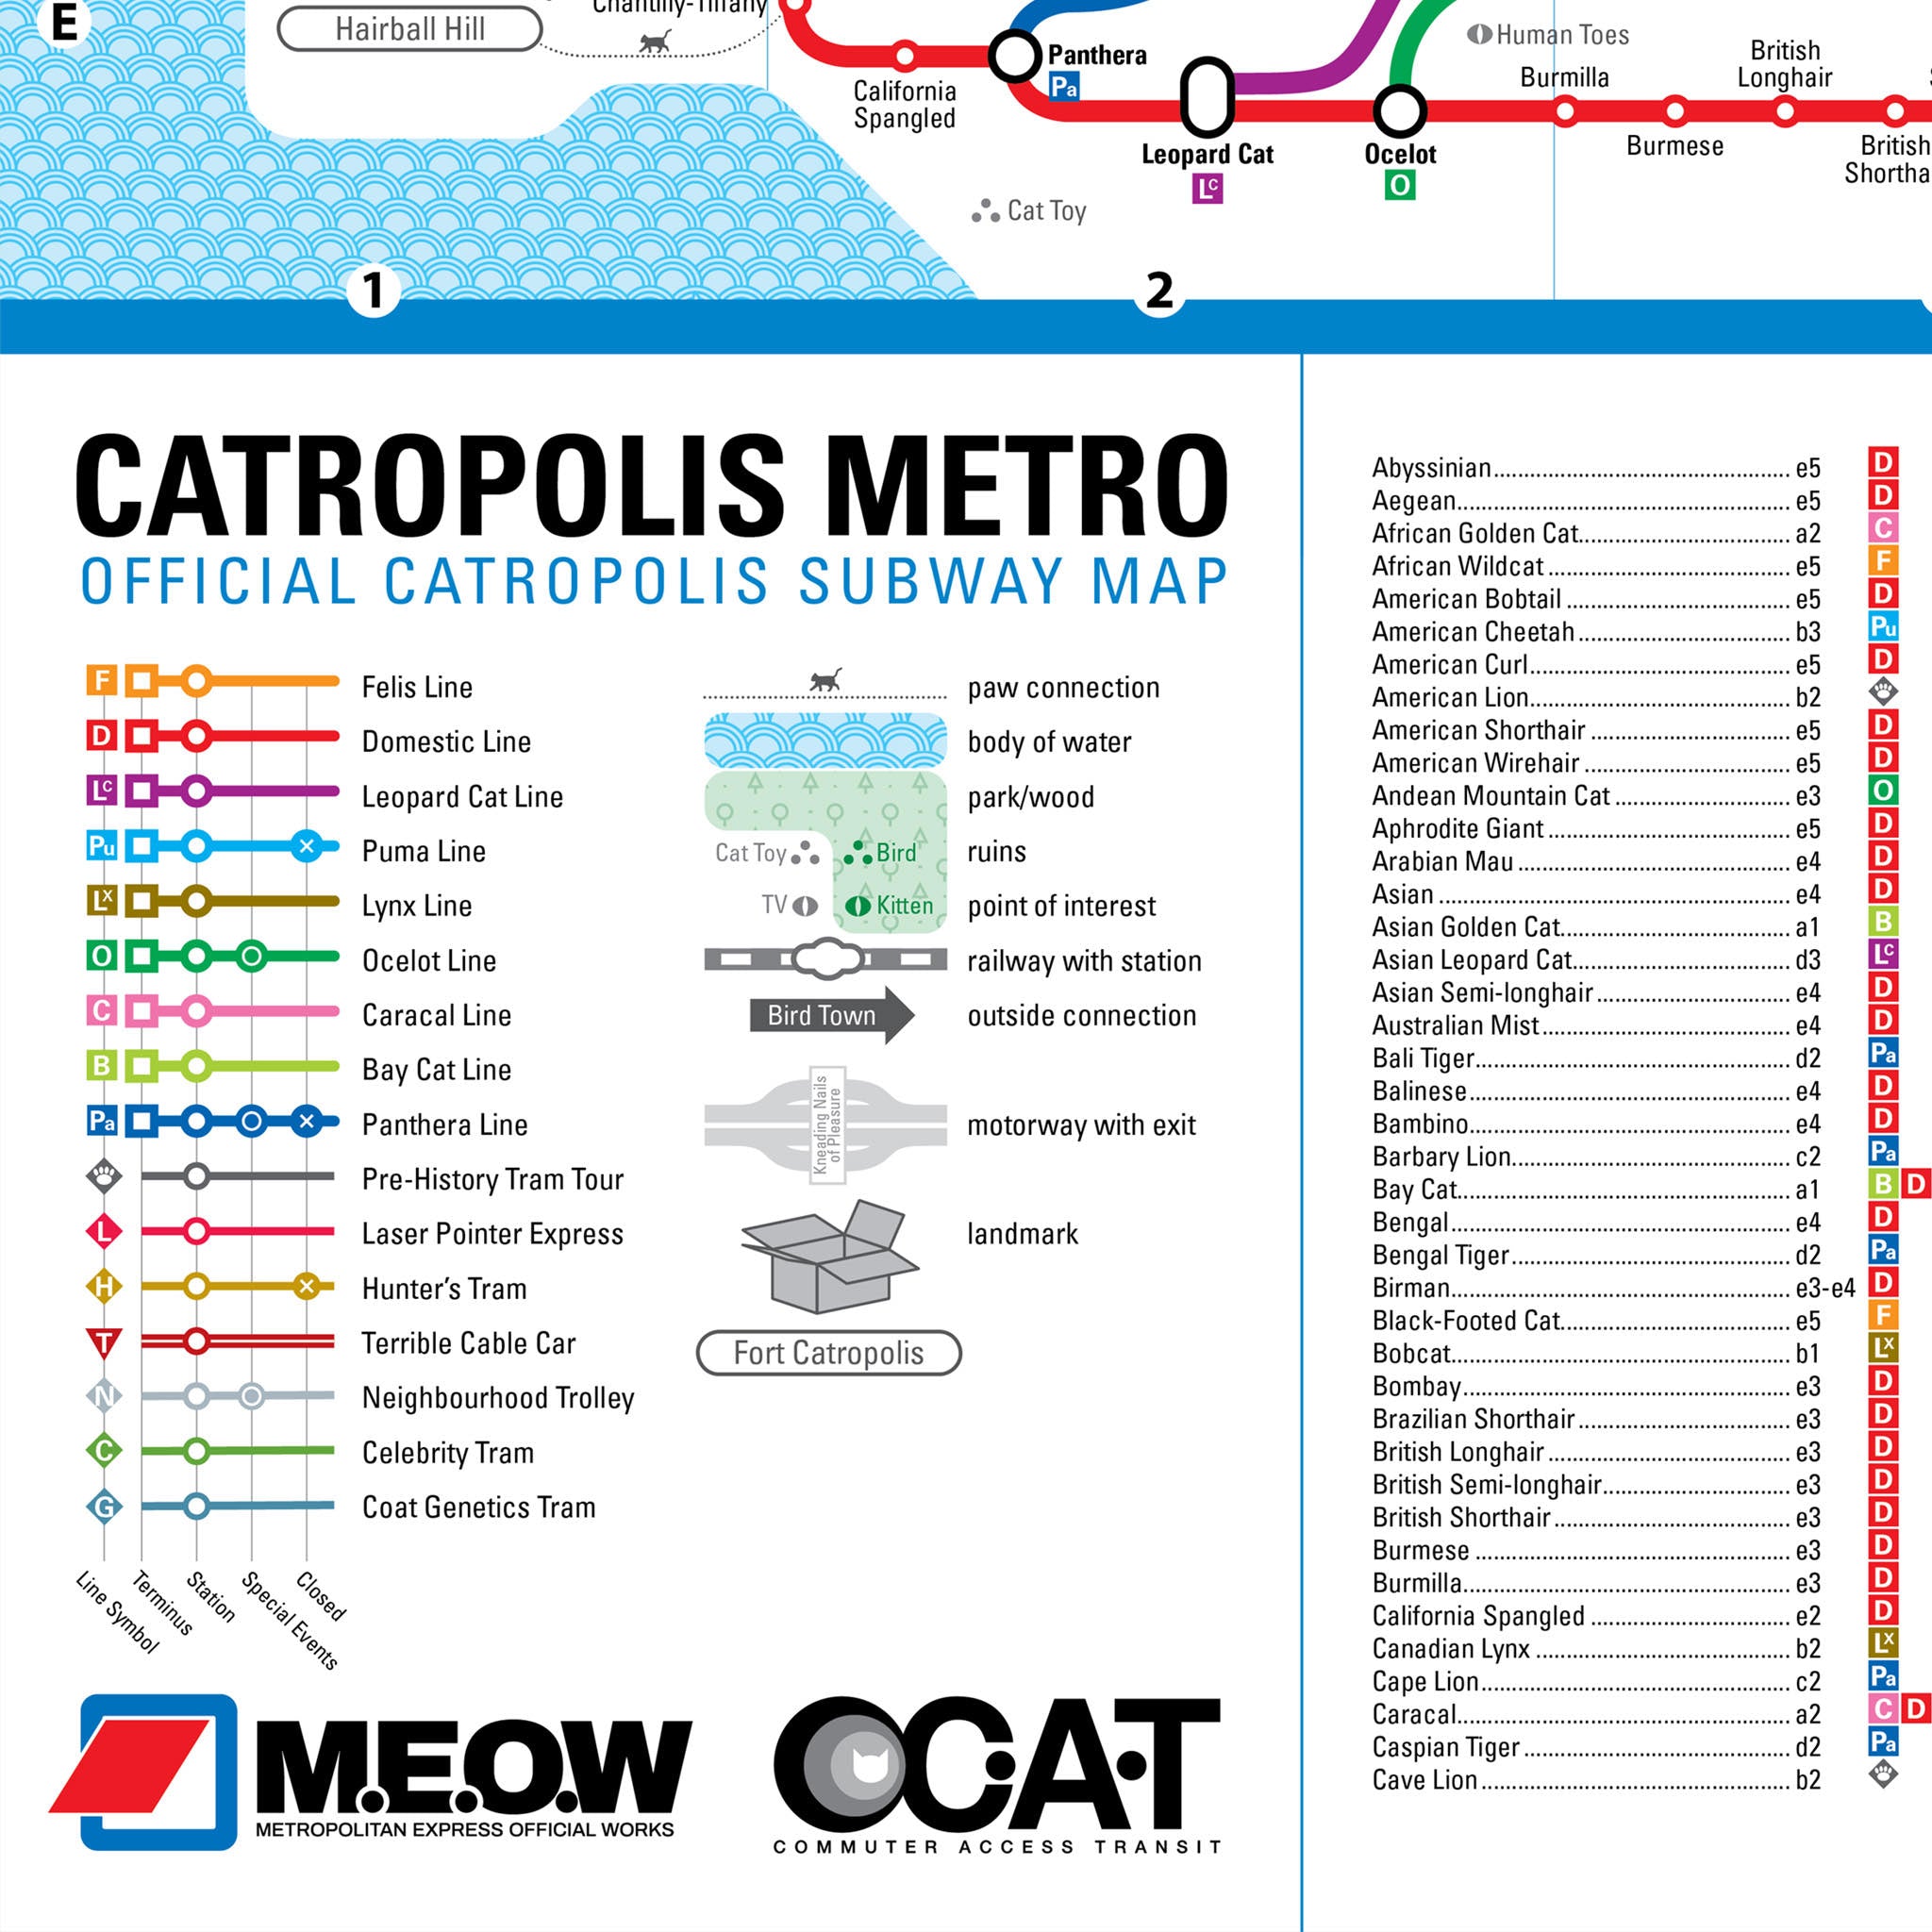 Catroplis Metro